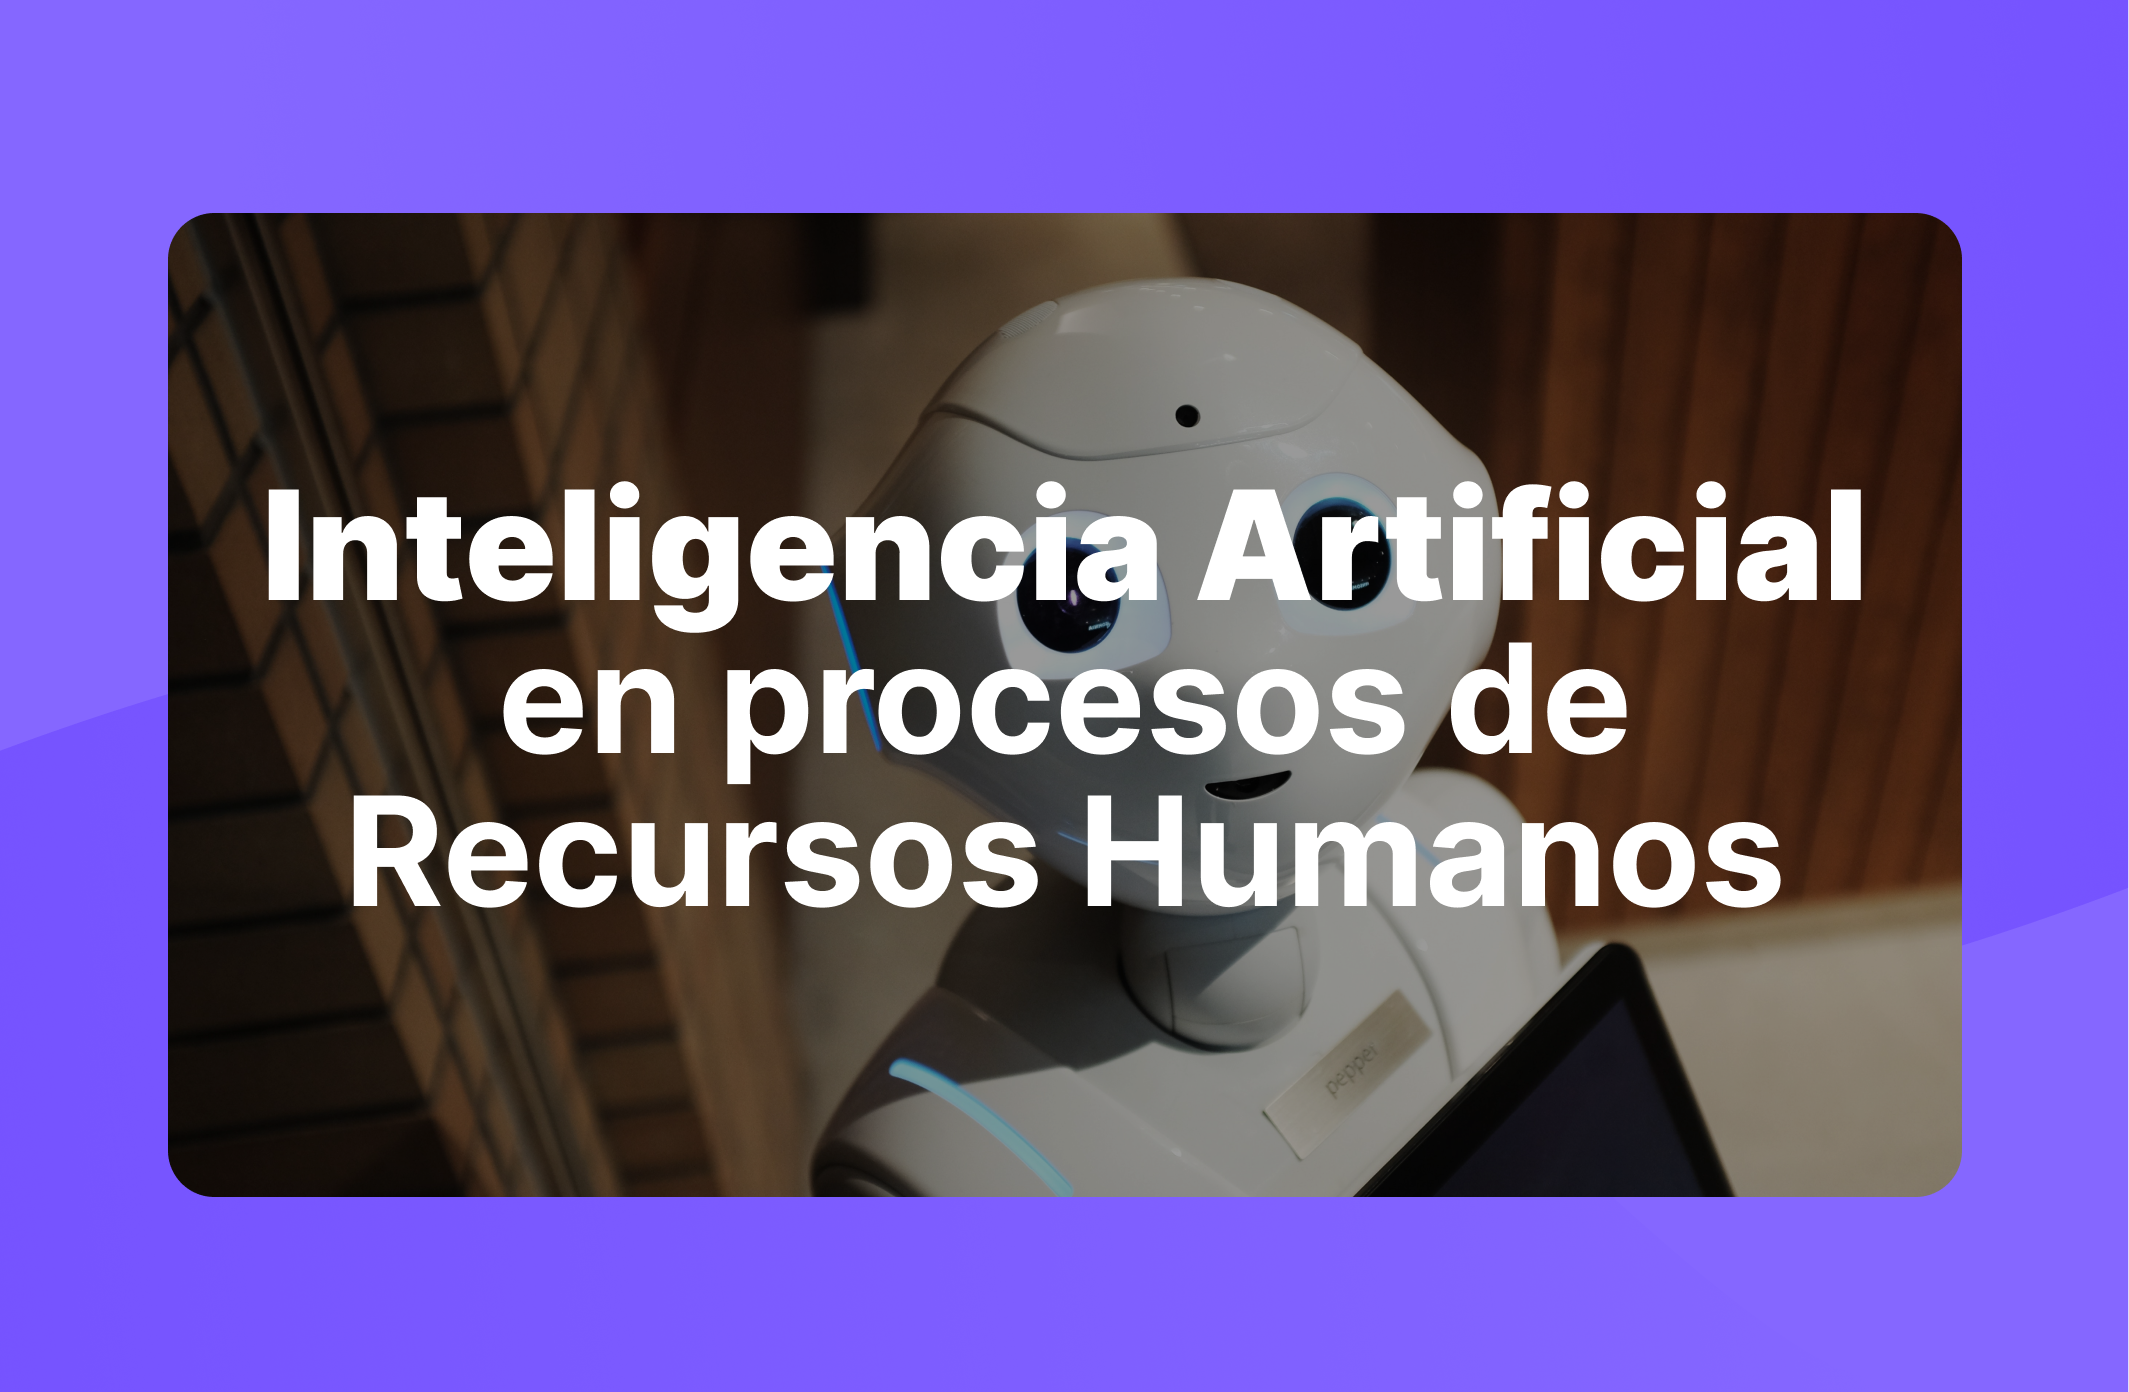 Inteligencia artificial en procesos de Recursos Humanos